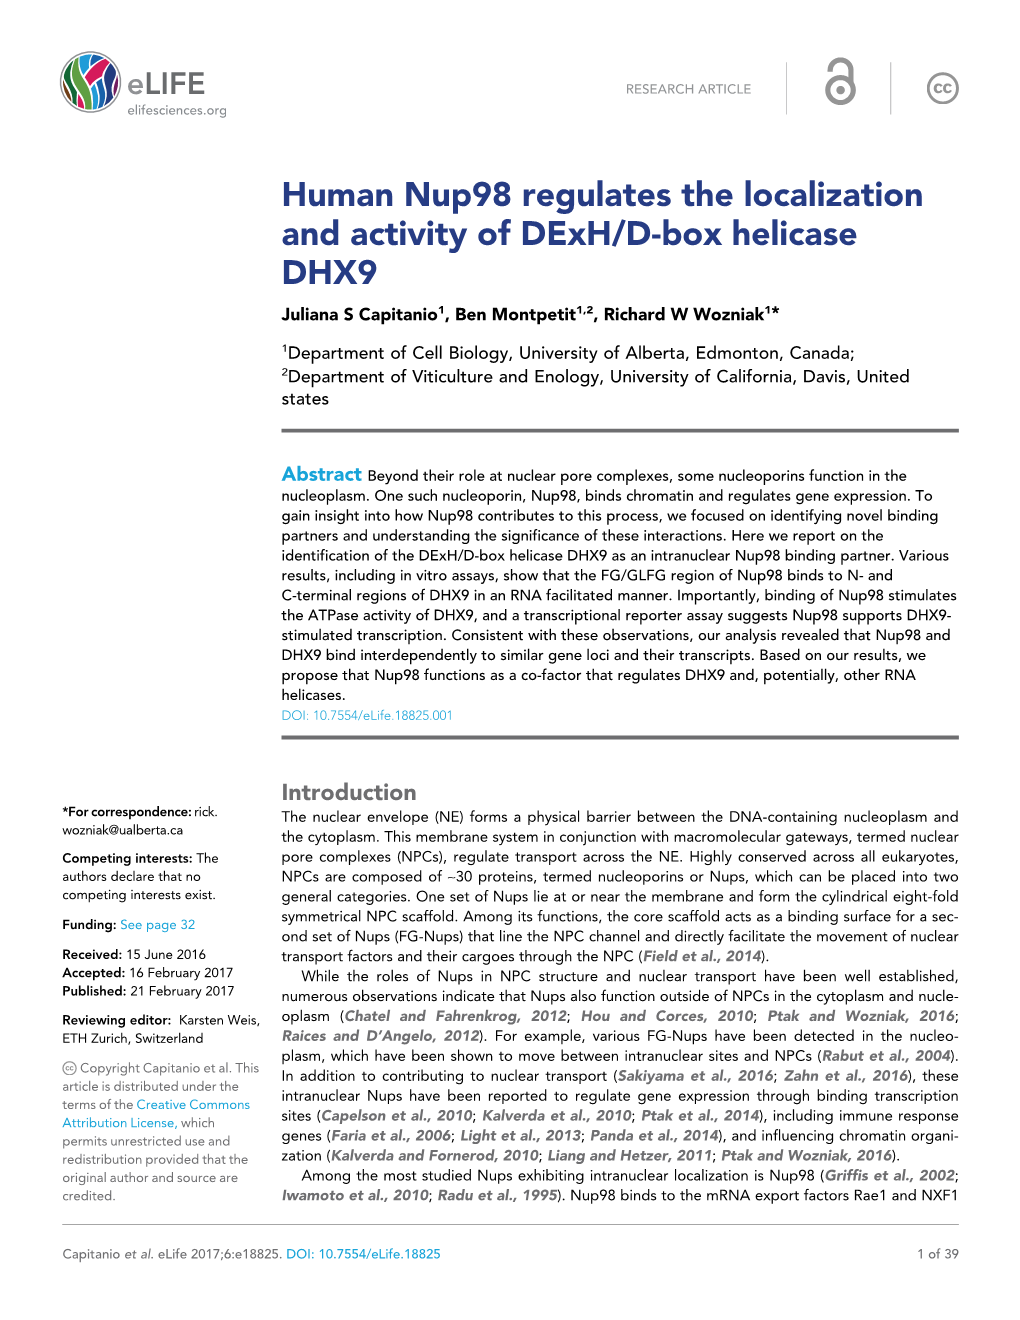 Human Nup98 Regulates the Localization and Activity of Dexh/D-Box Helicase DHX9 Juliana S Capitanio1, Ben Montpetit1,2, Richard W Wozniak1*